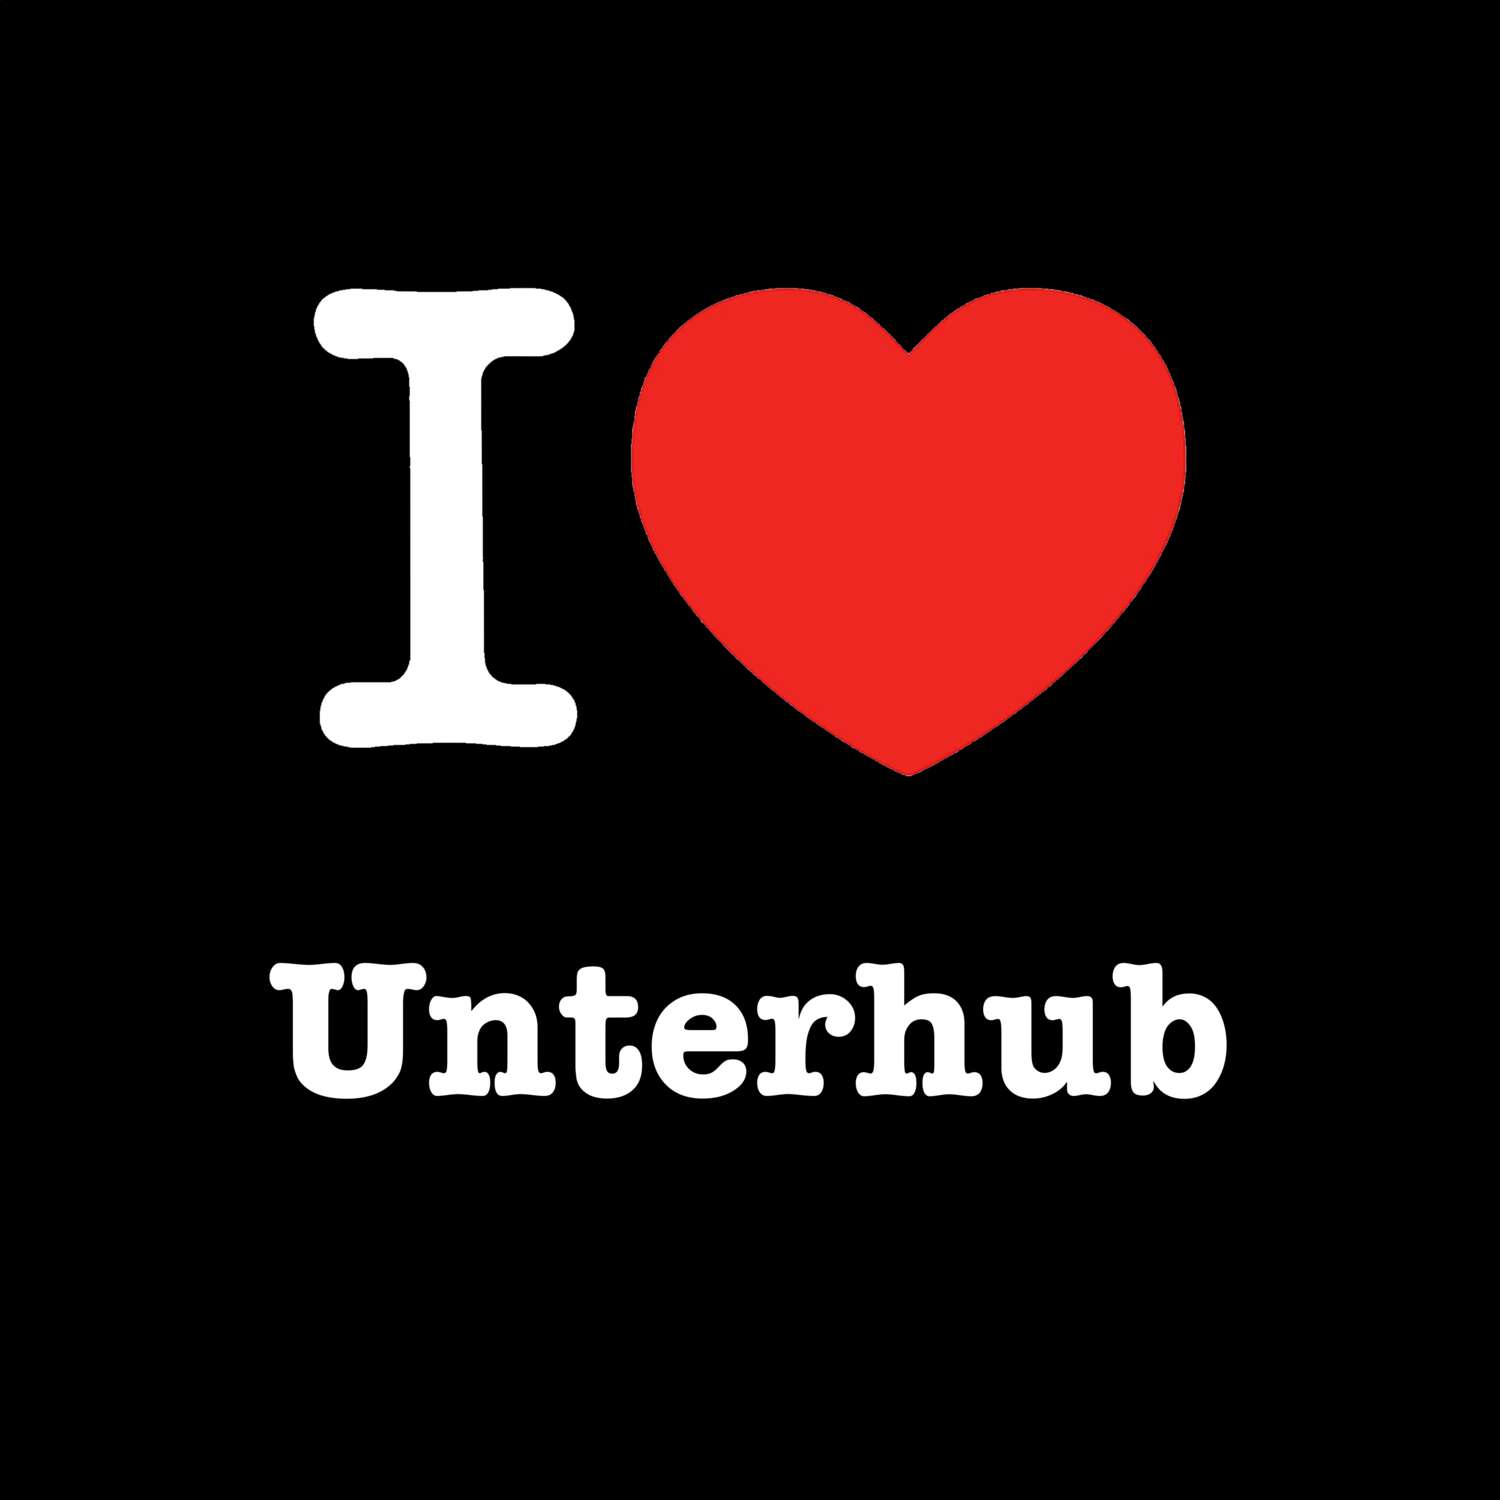 Unterhub T-Shirt »I love«